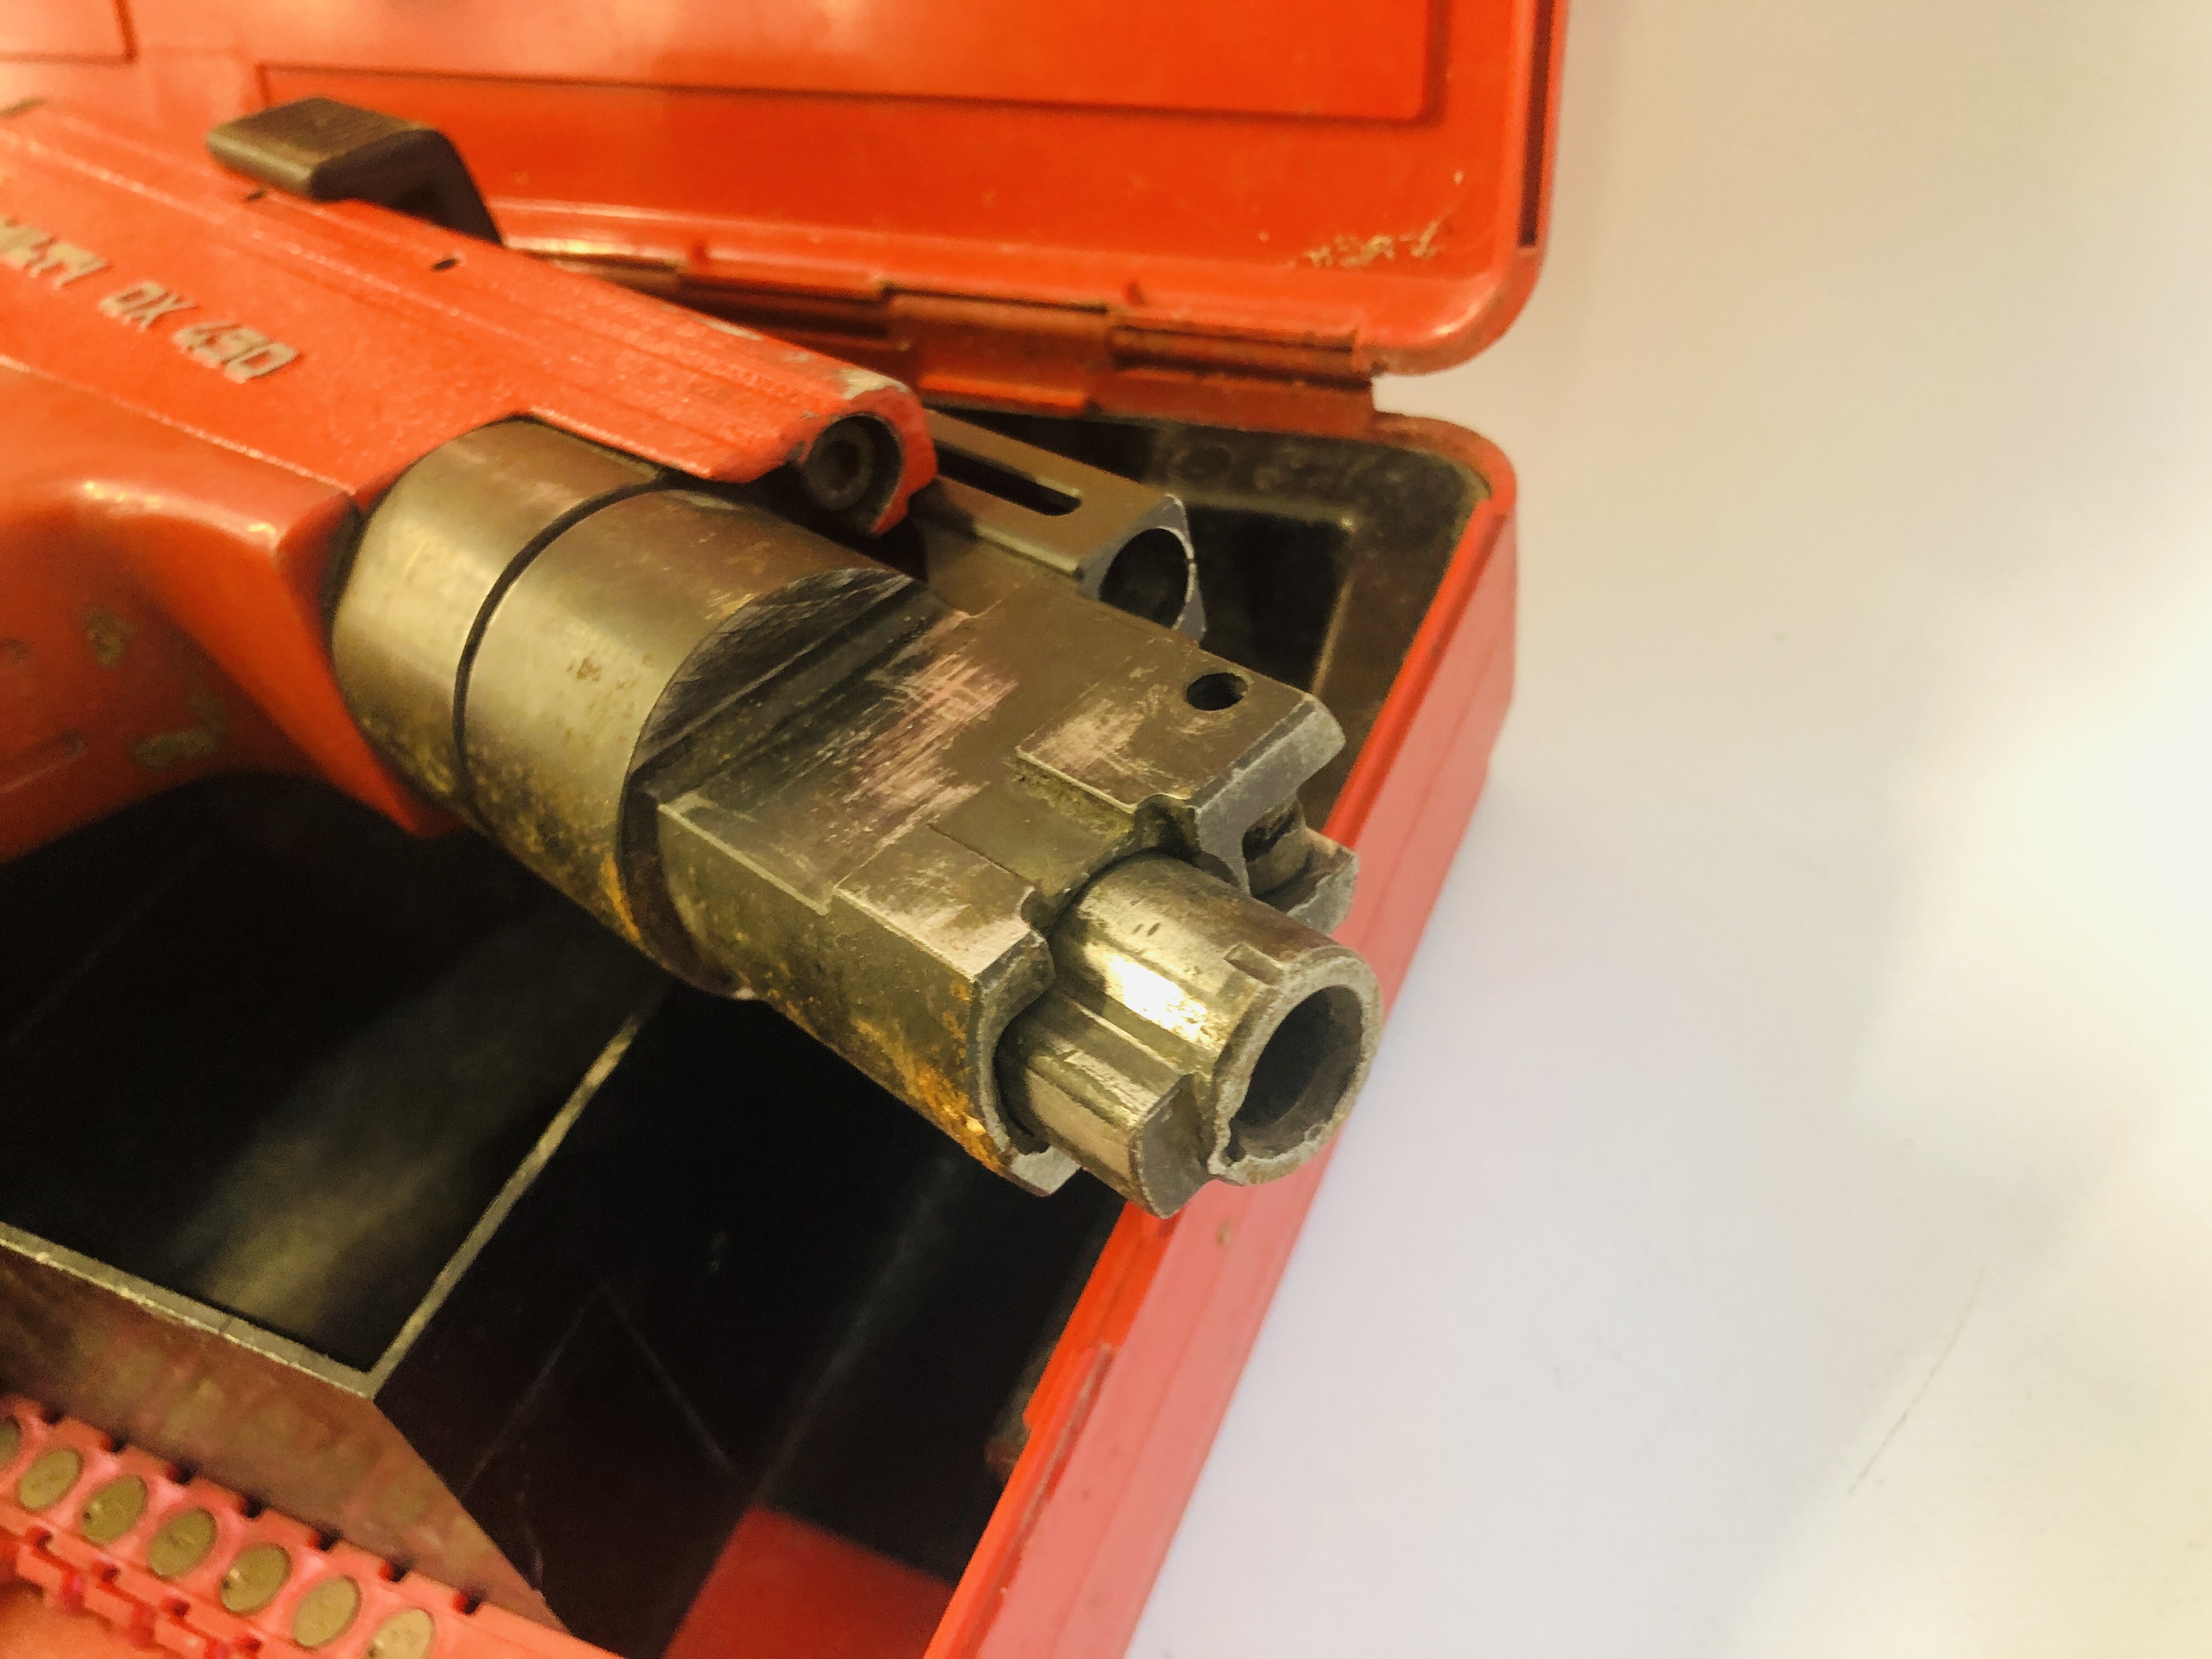 HILTI DX 450 NAIL GUN (BOXED) - SOLD AS SEEN - Image 4 of 4